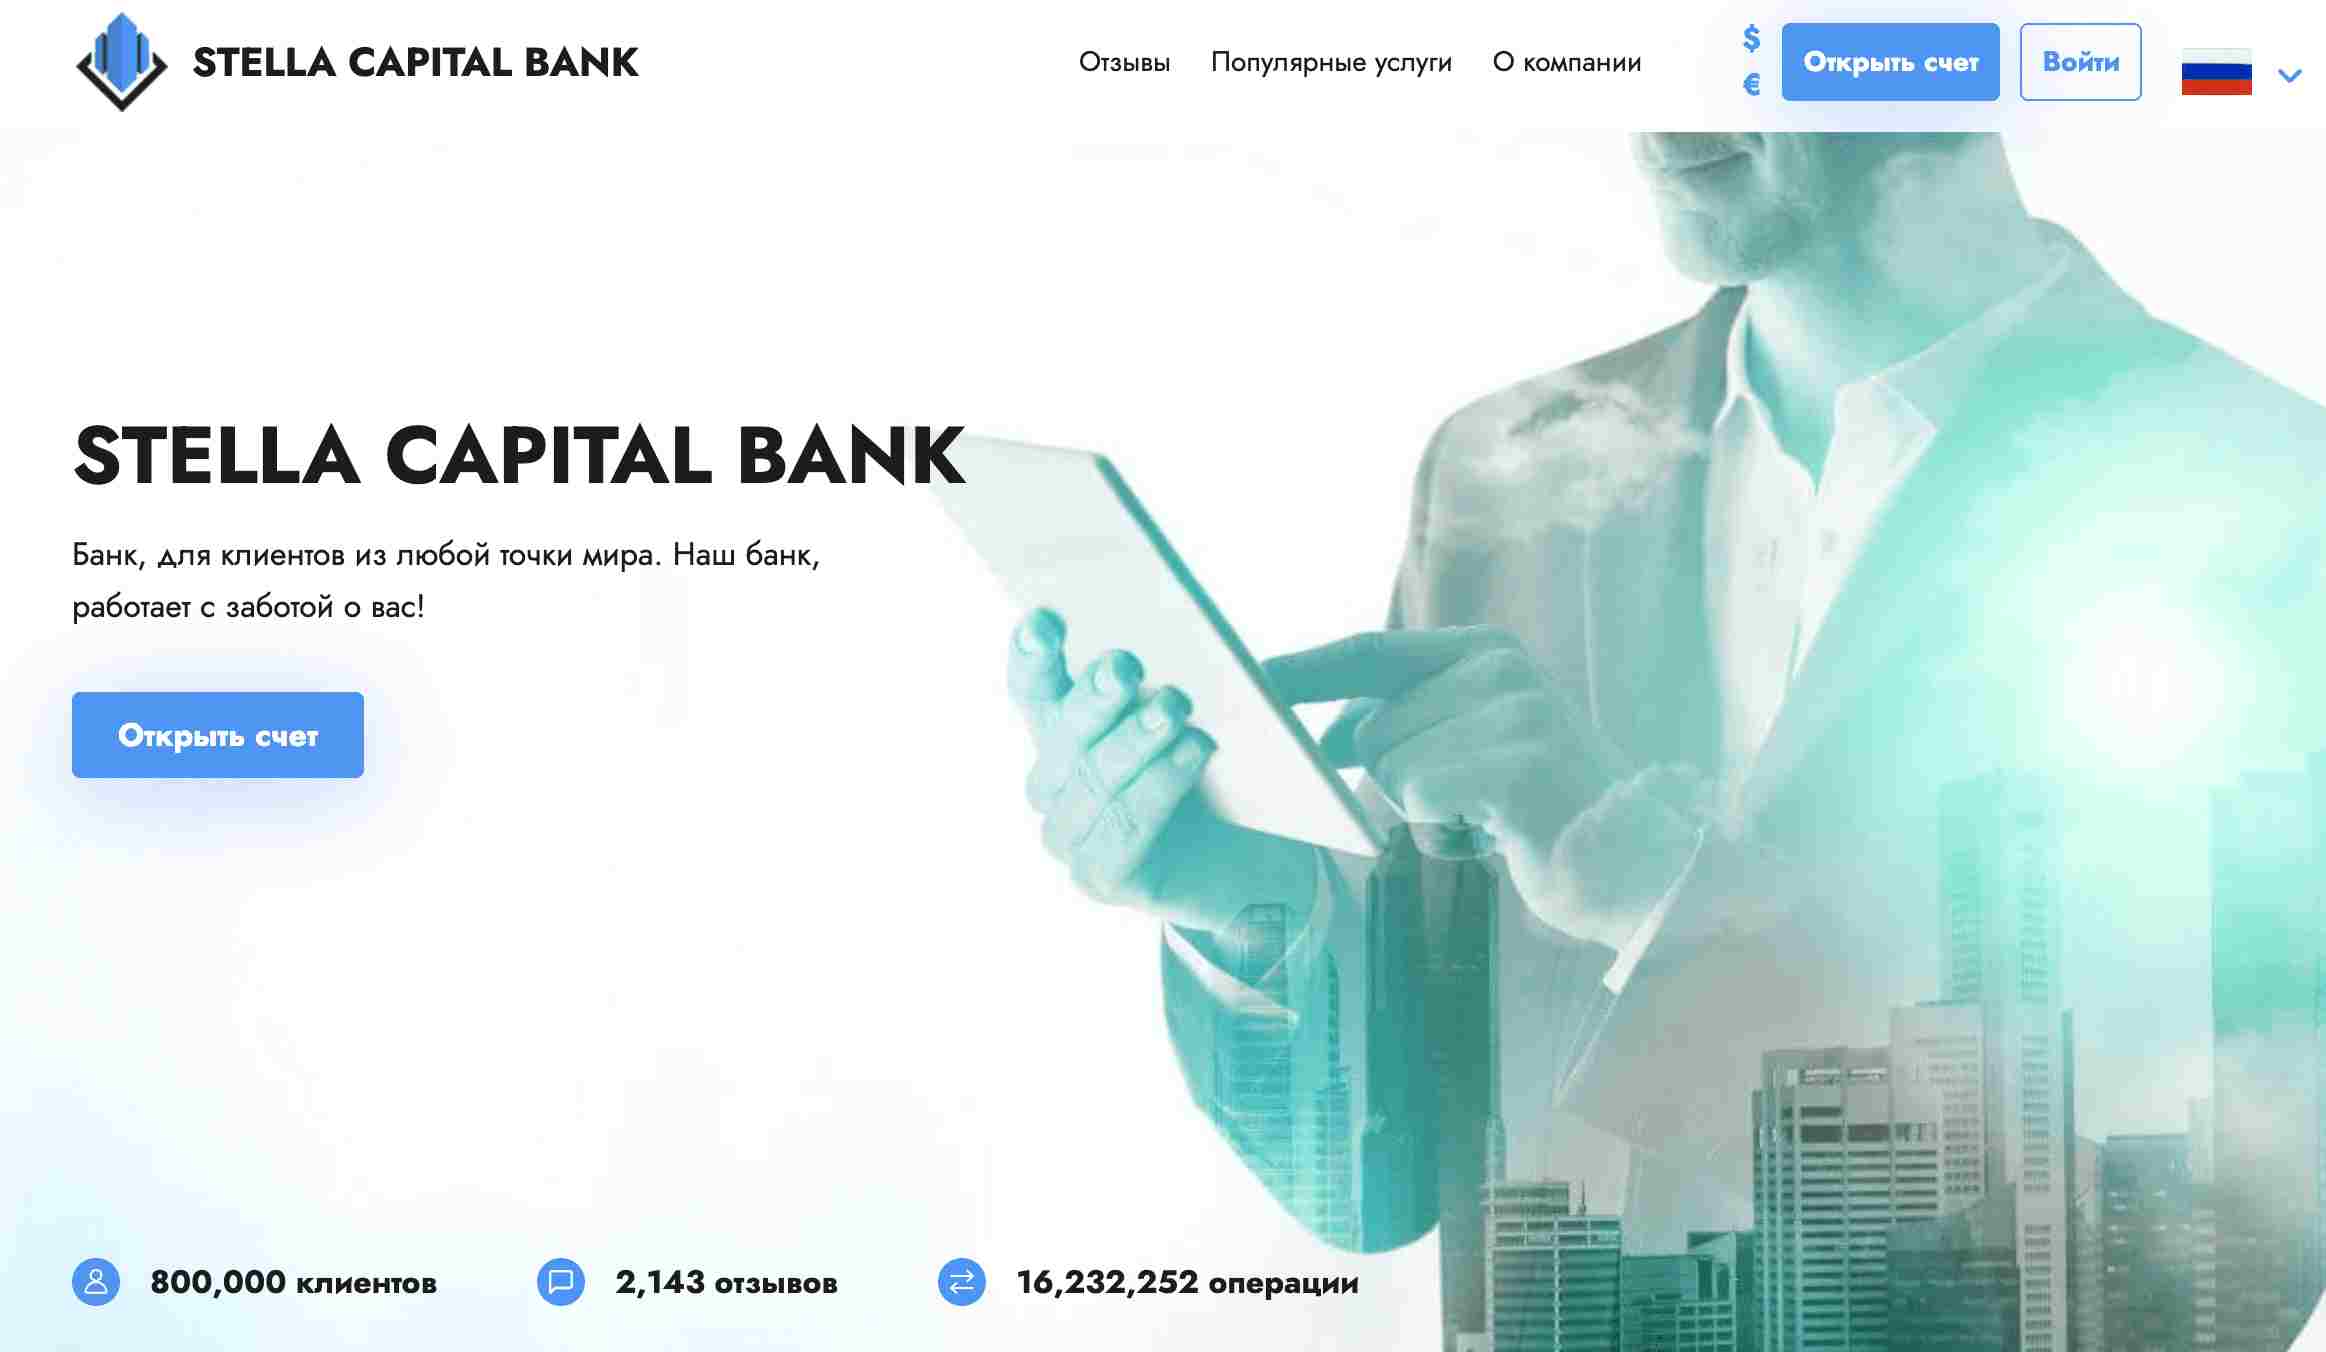 Stella Capital Bank